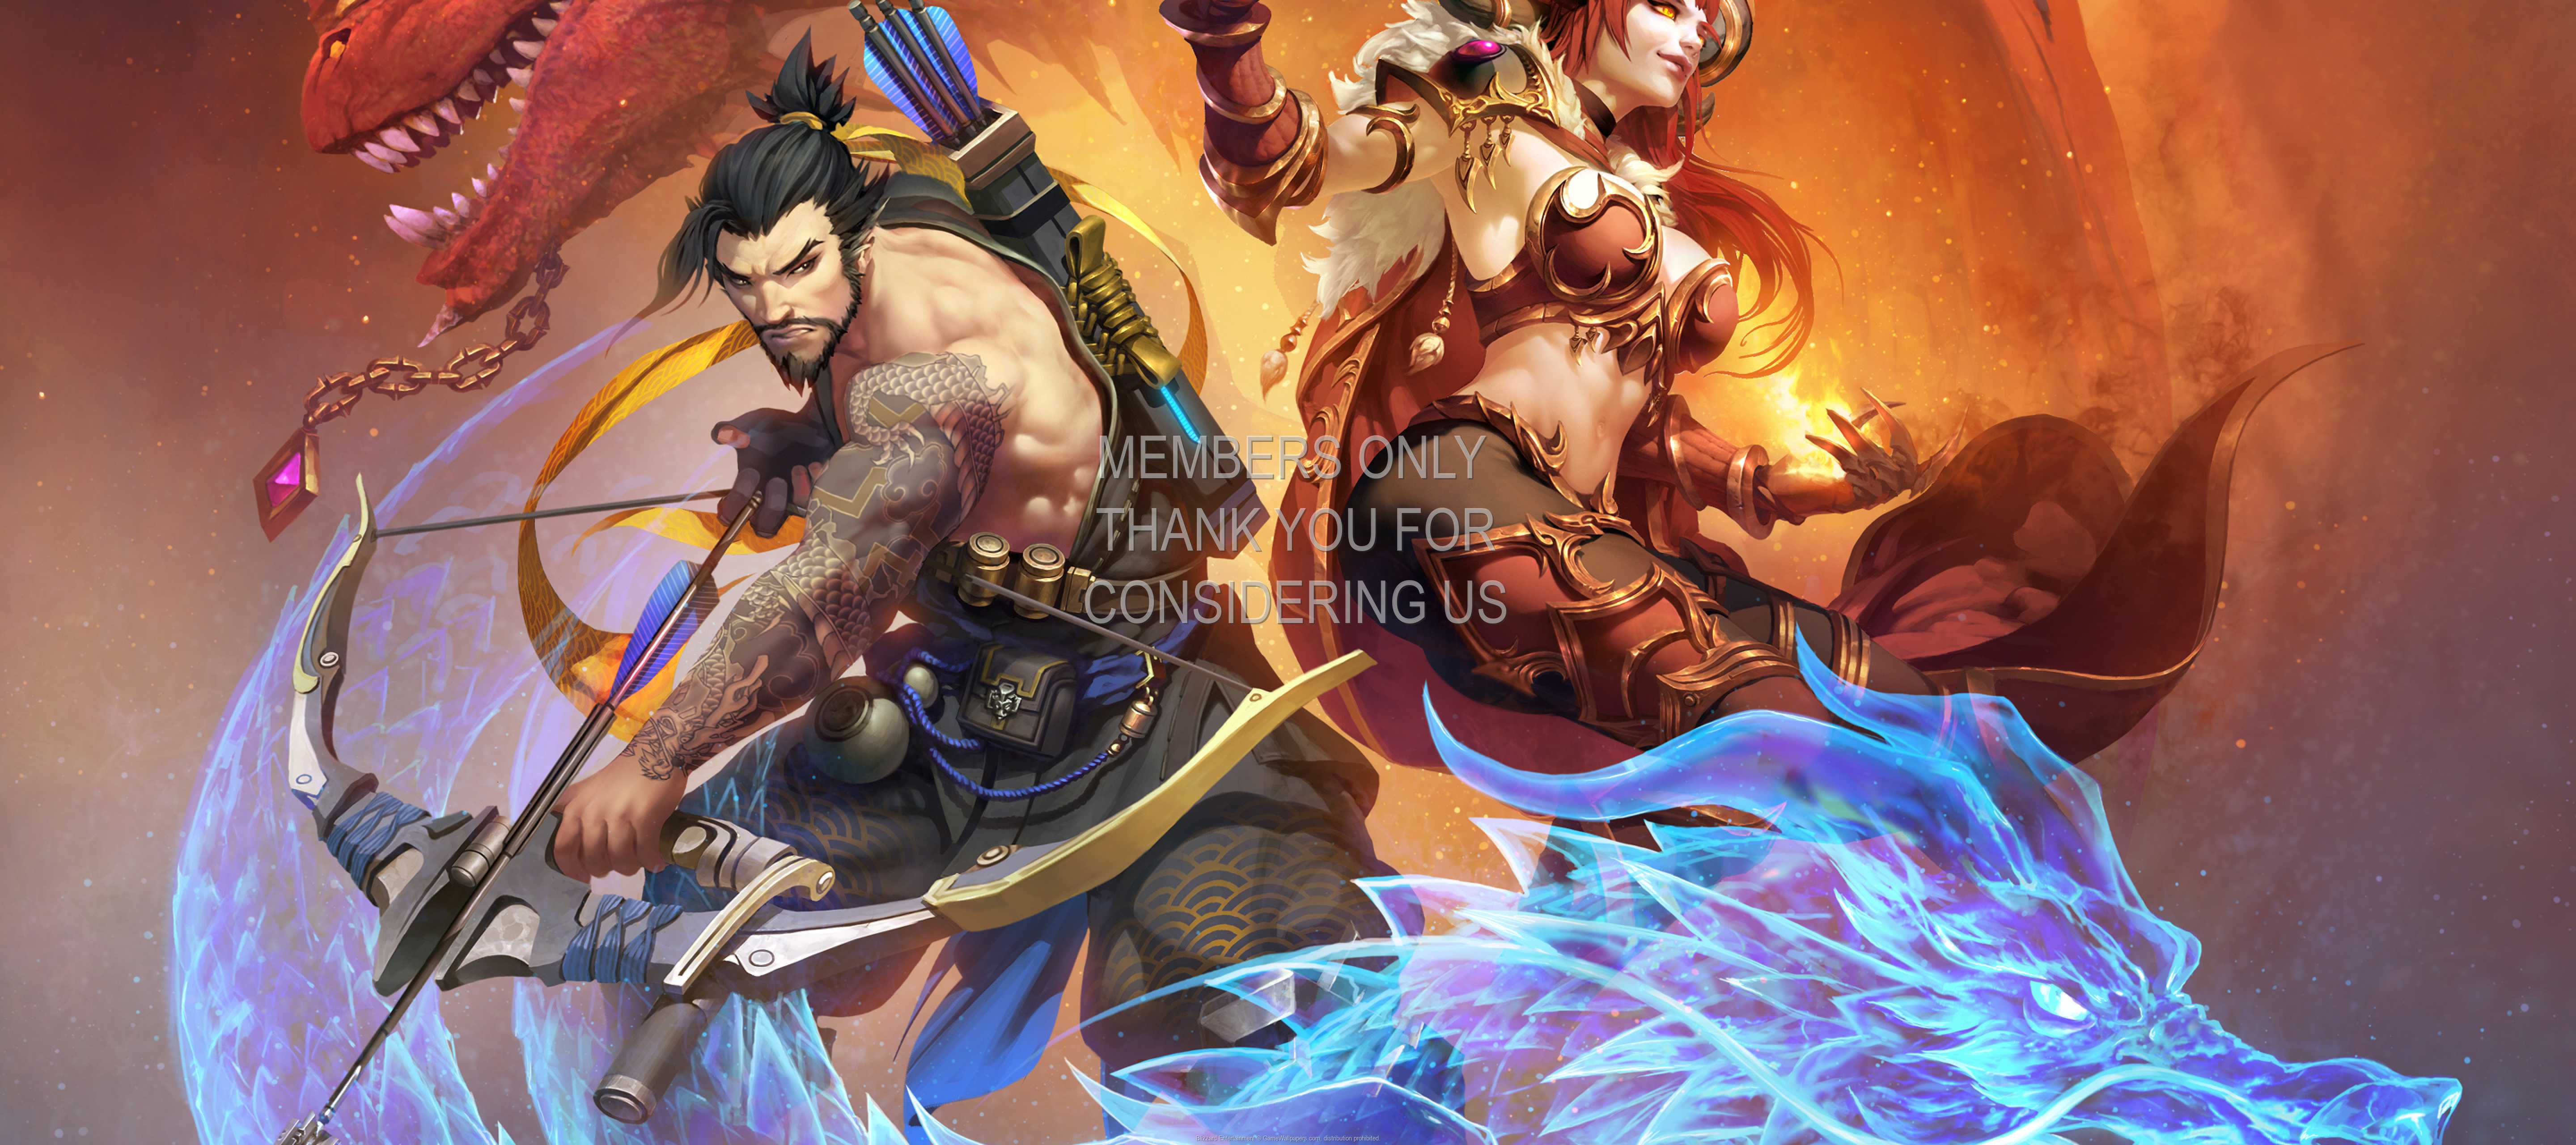 Blizzard Entertainment 1440p%20Horizontal Mobile wallpaper or background 04